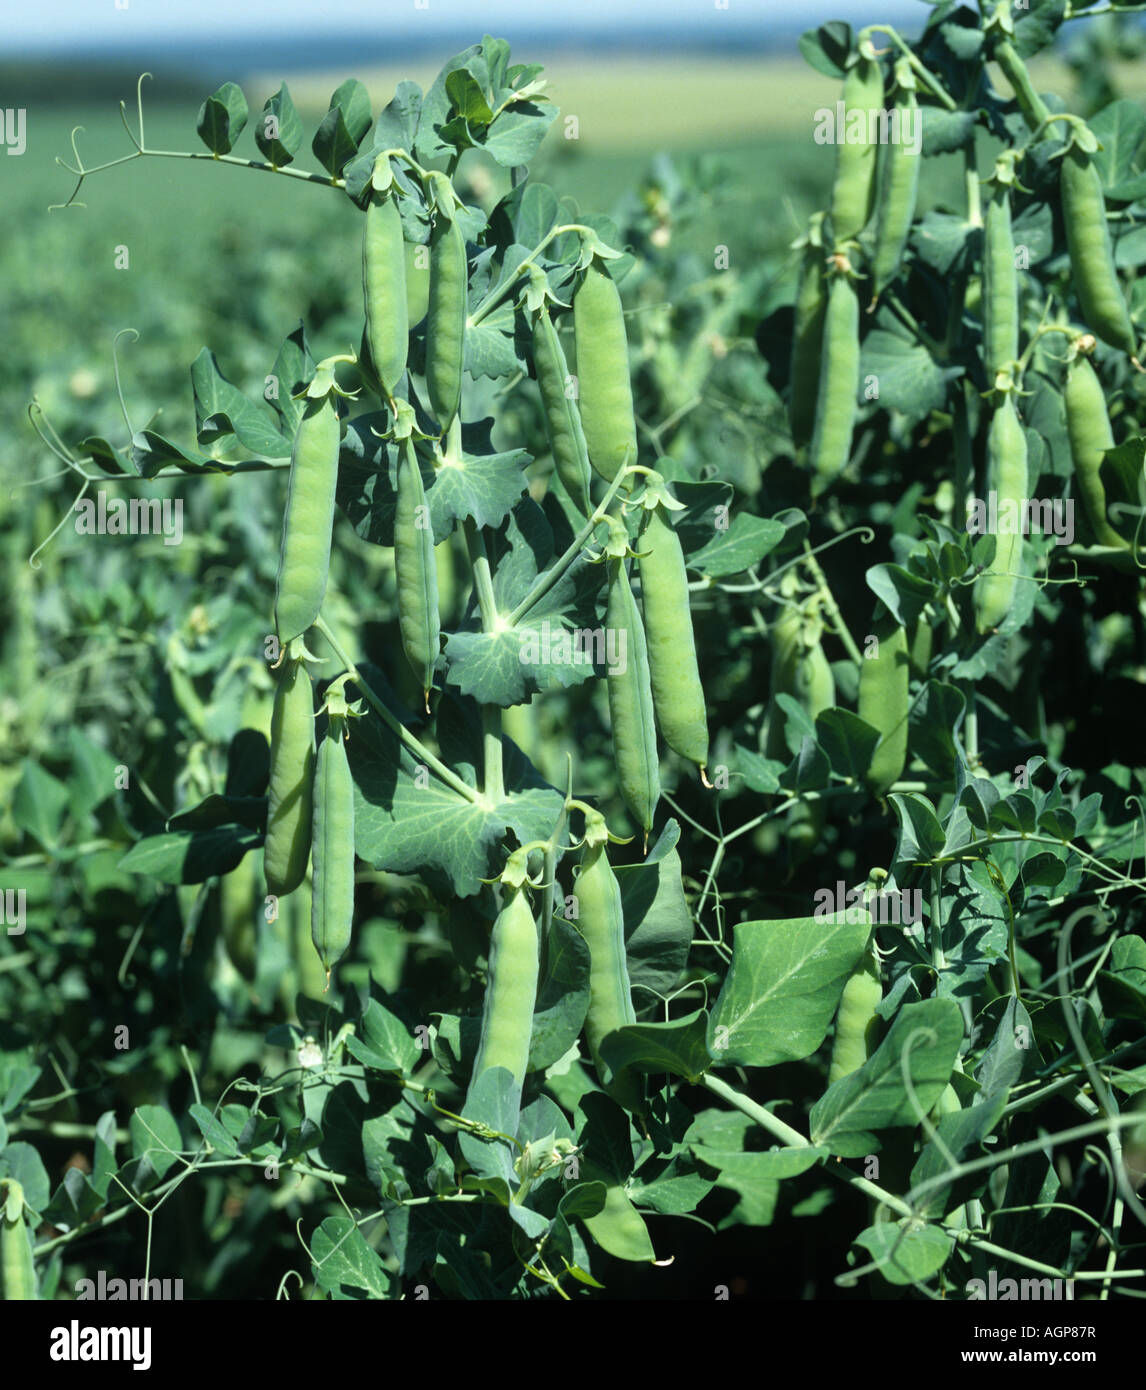 Pea crop in mature pod marrowfat variety Maro Stock Photo